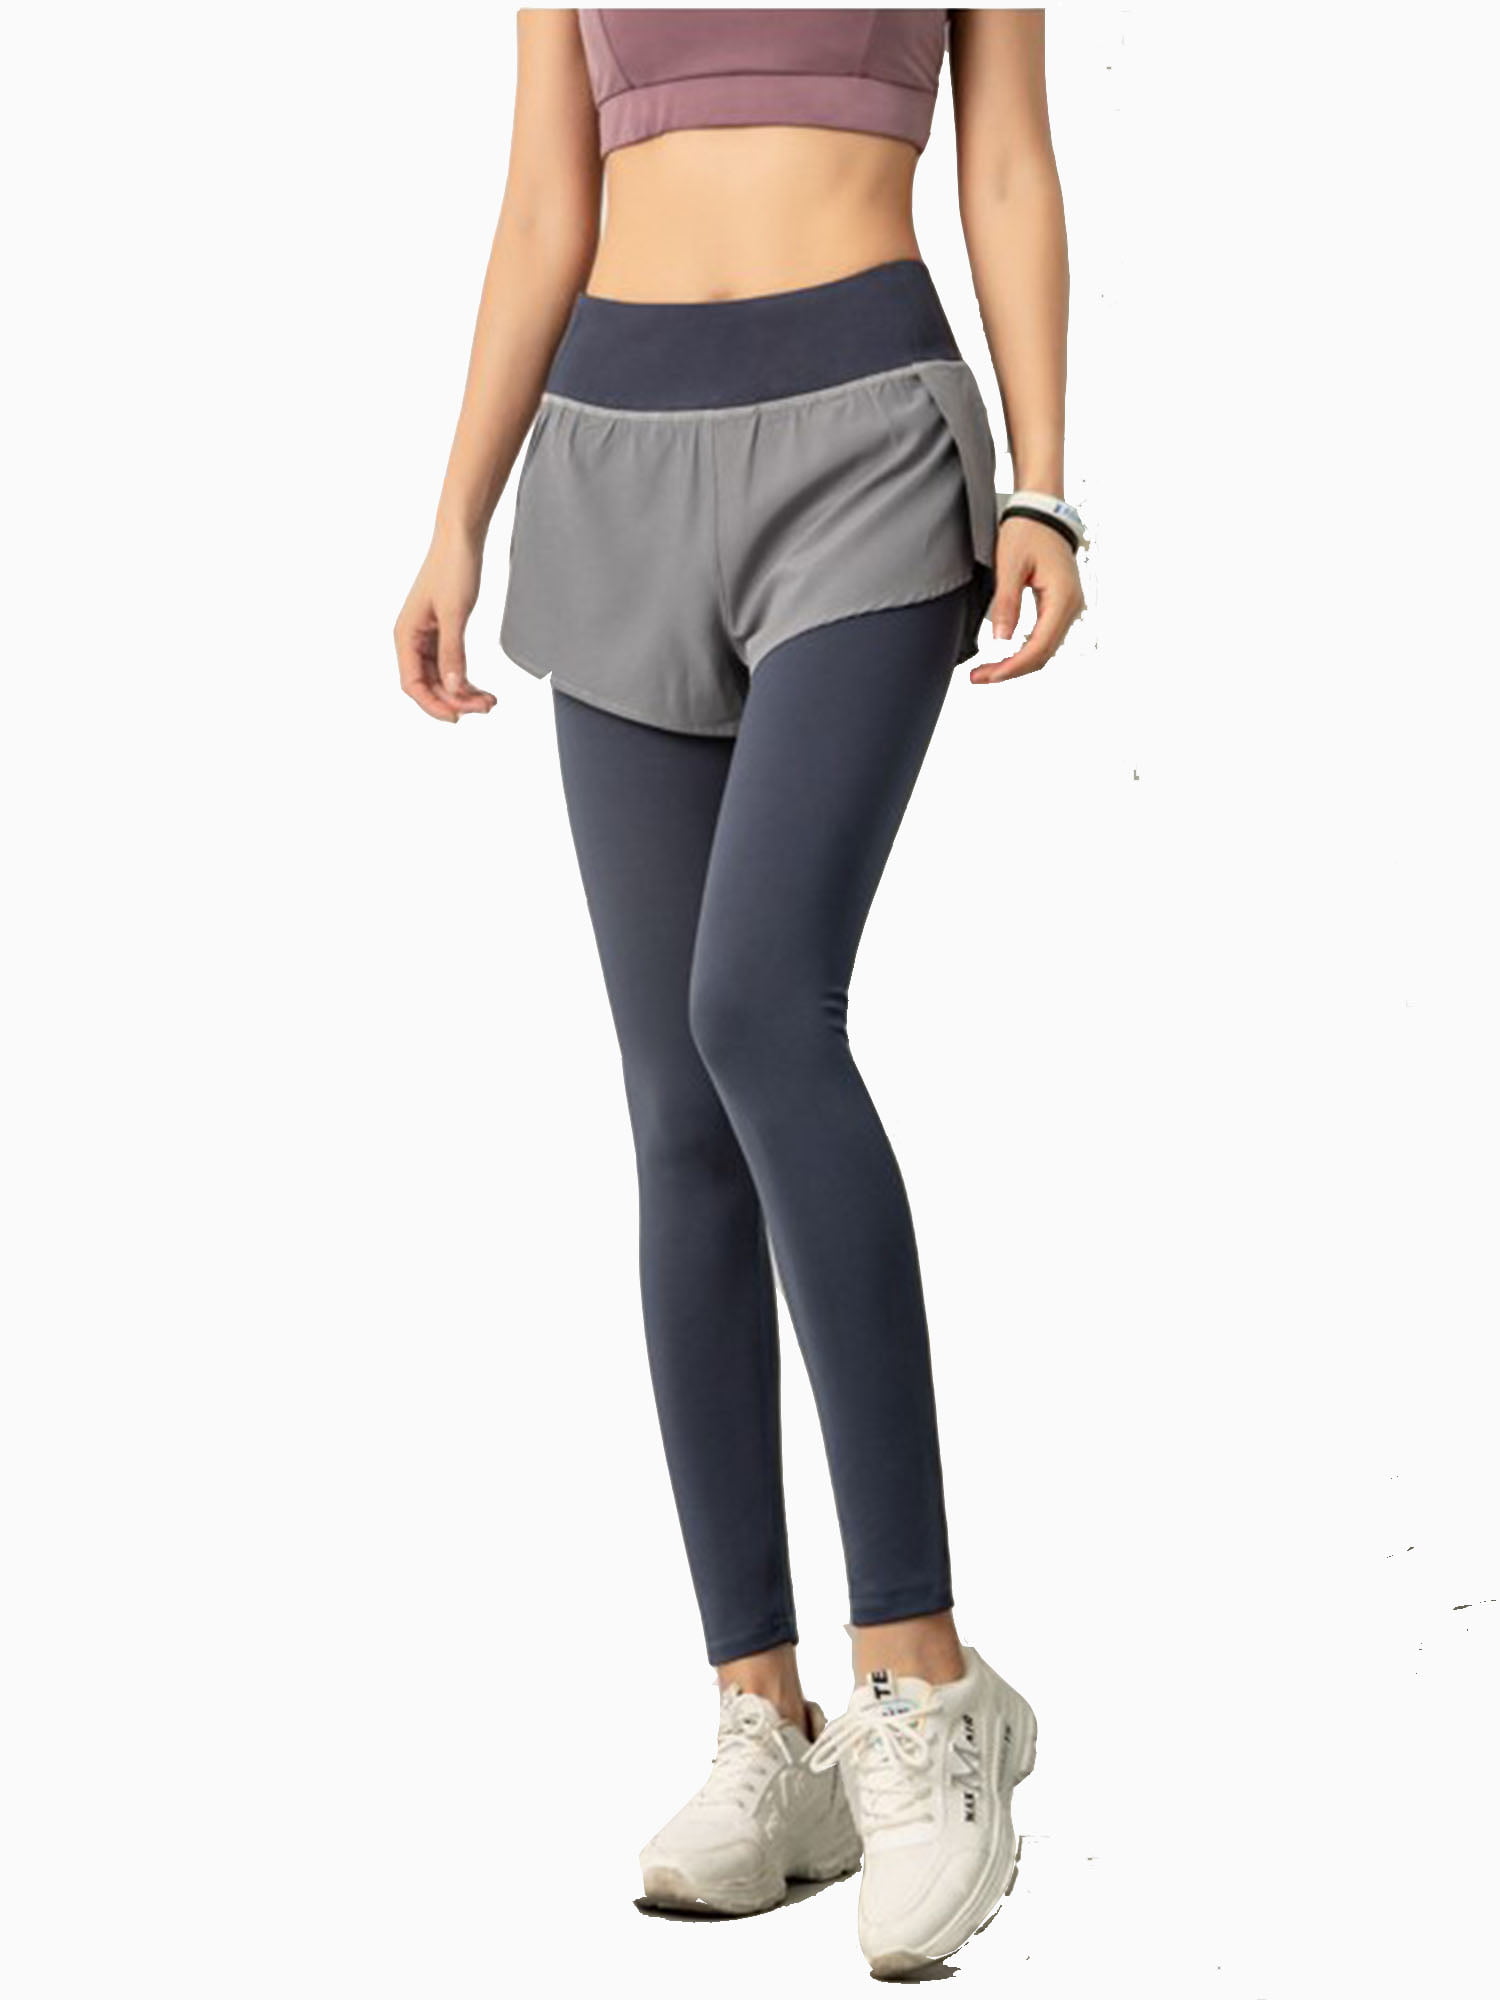 GAGA Womens Fashion Yoga Workout Athletic Joggers Active Pants 3 XL 